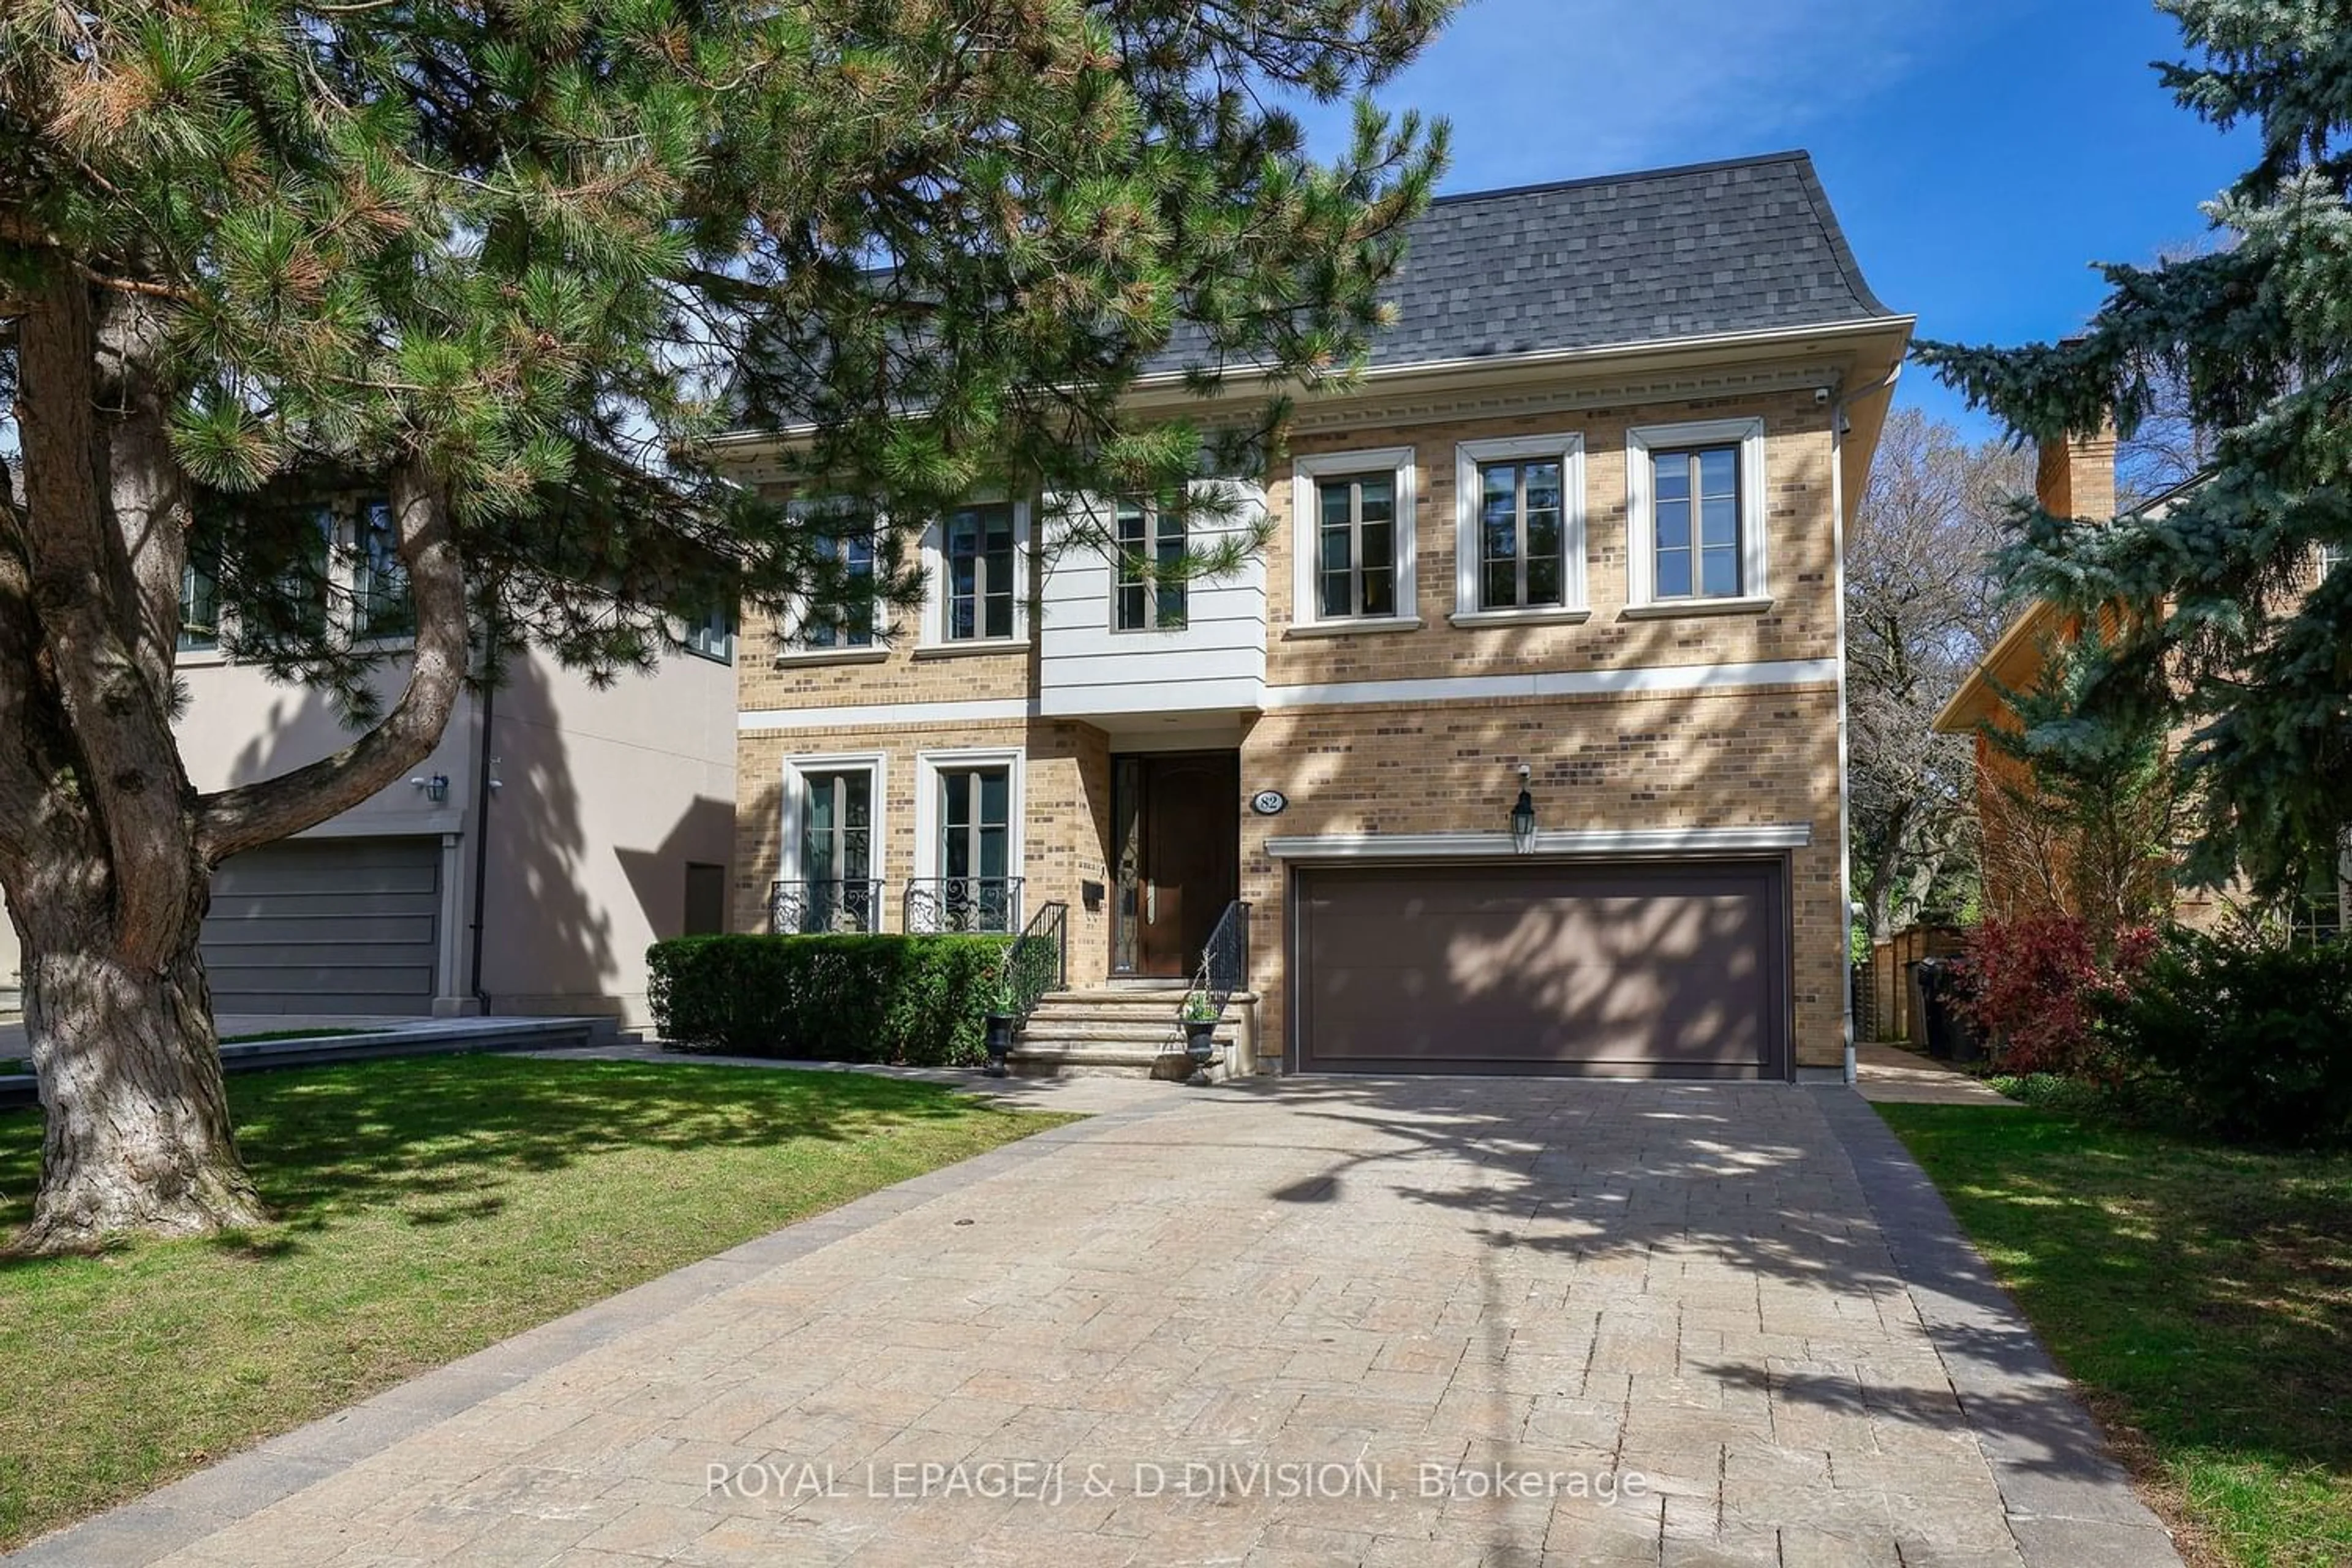 Home with brick exterior material for 82 Munro Blvd, Toronto Ontario M2P 1C4